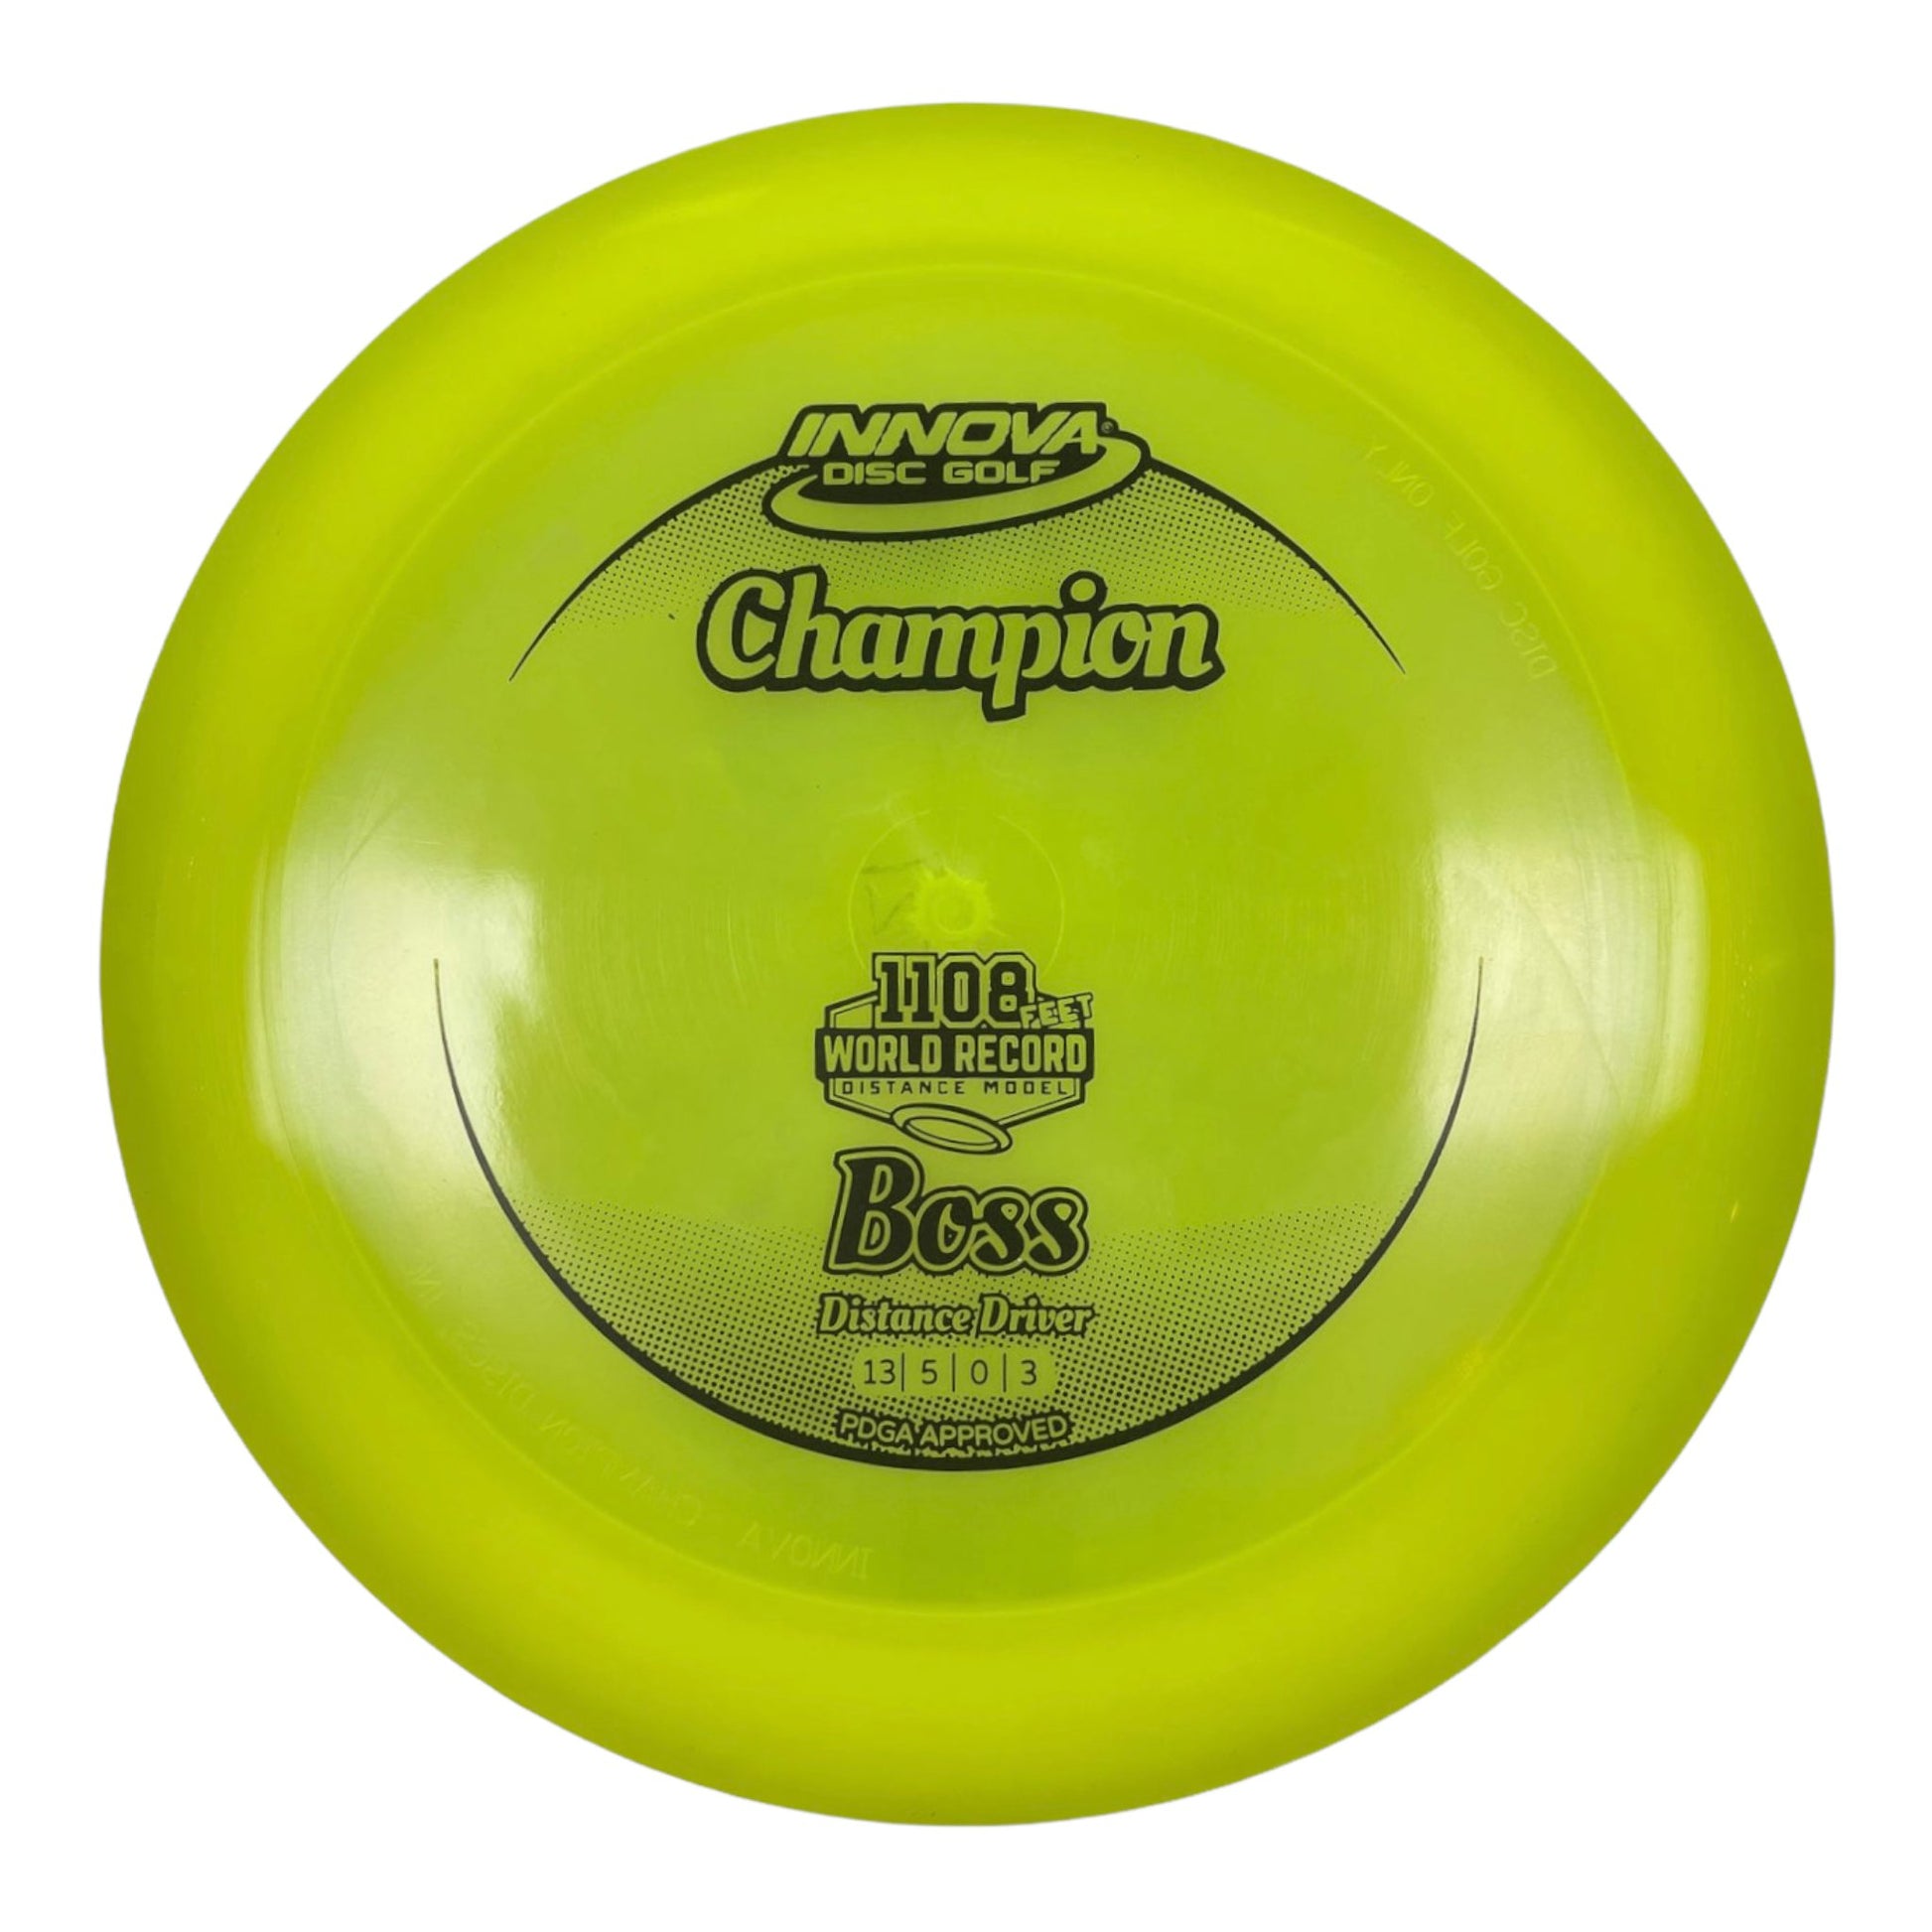 Innova Champion Discs Boss | Champion | Yellow/Black 175g Disc Golf